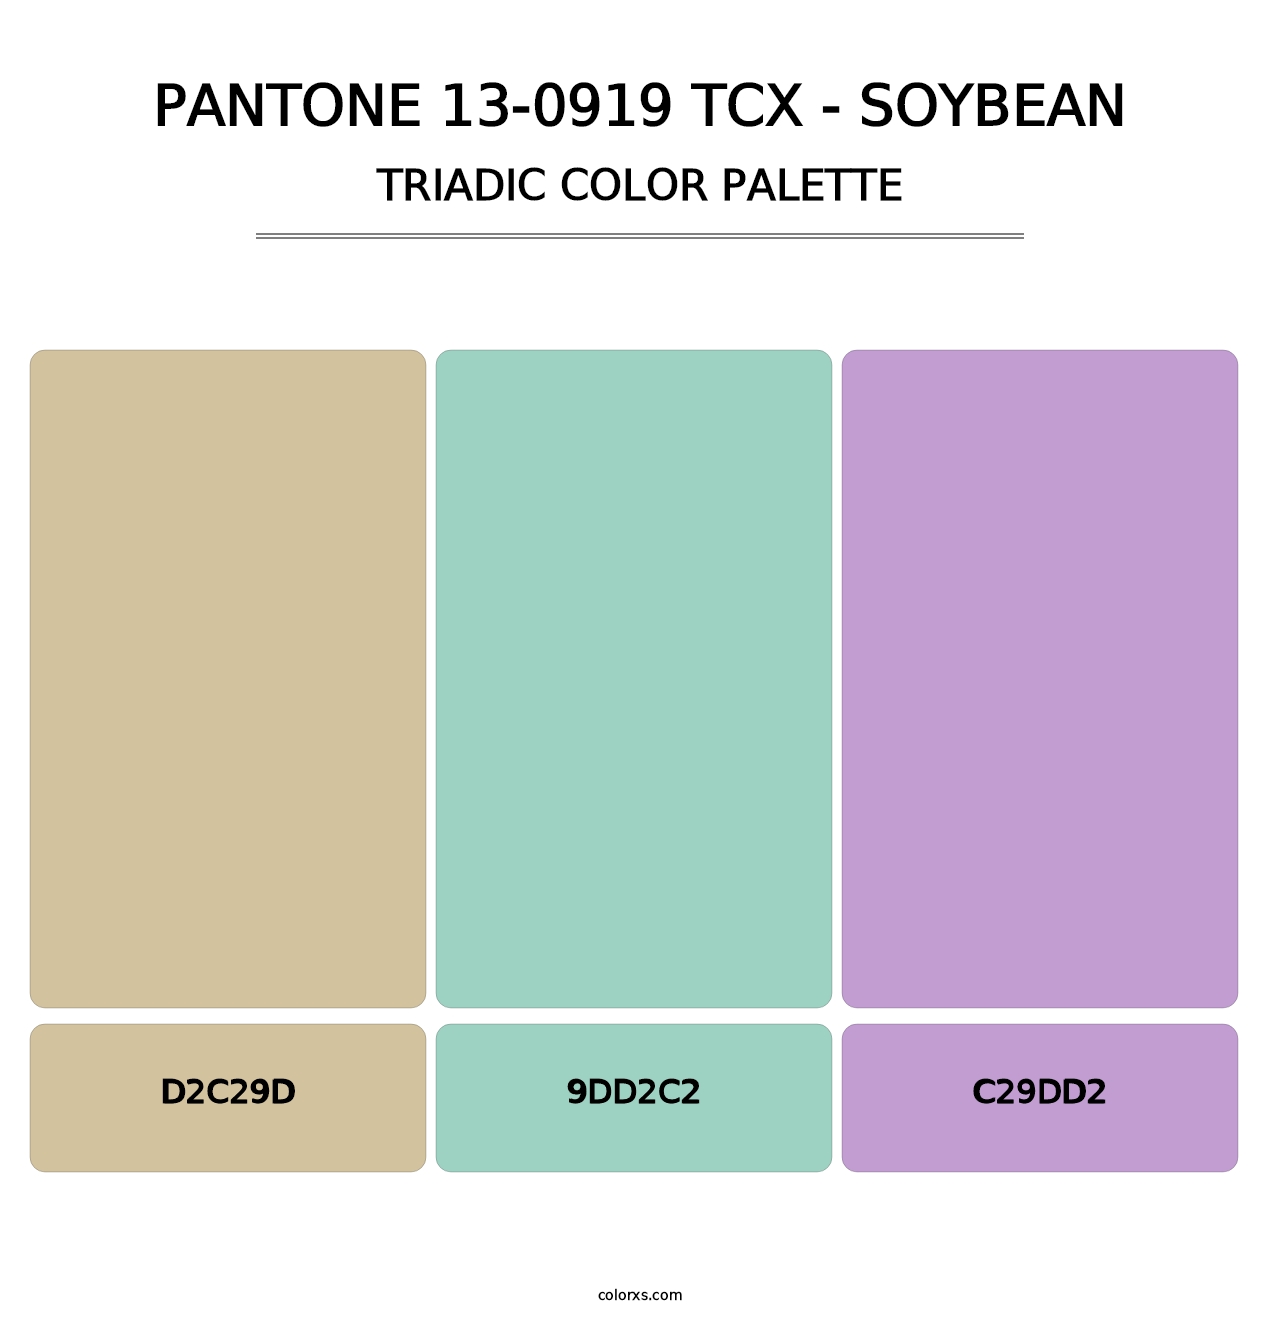 PANTONE 13-0919 TCX - Soybean - Triadic Color Palette